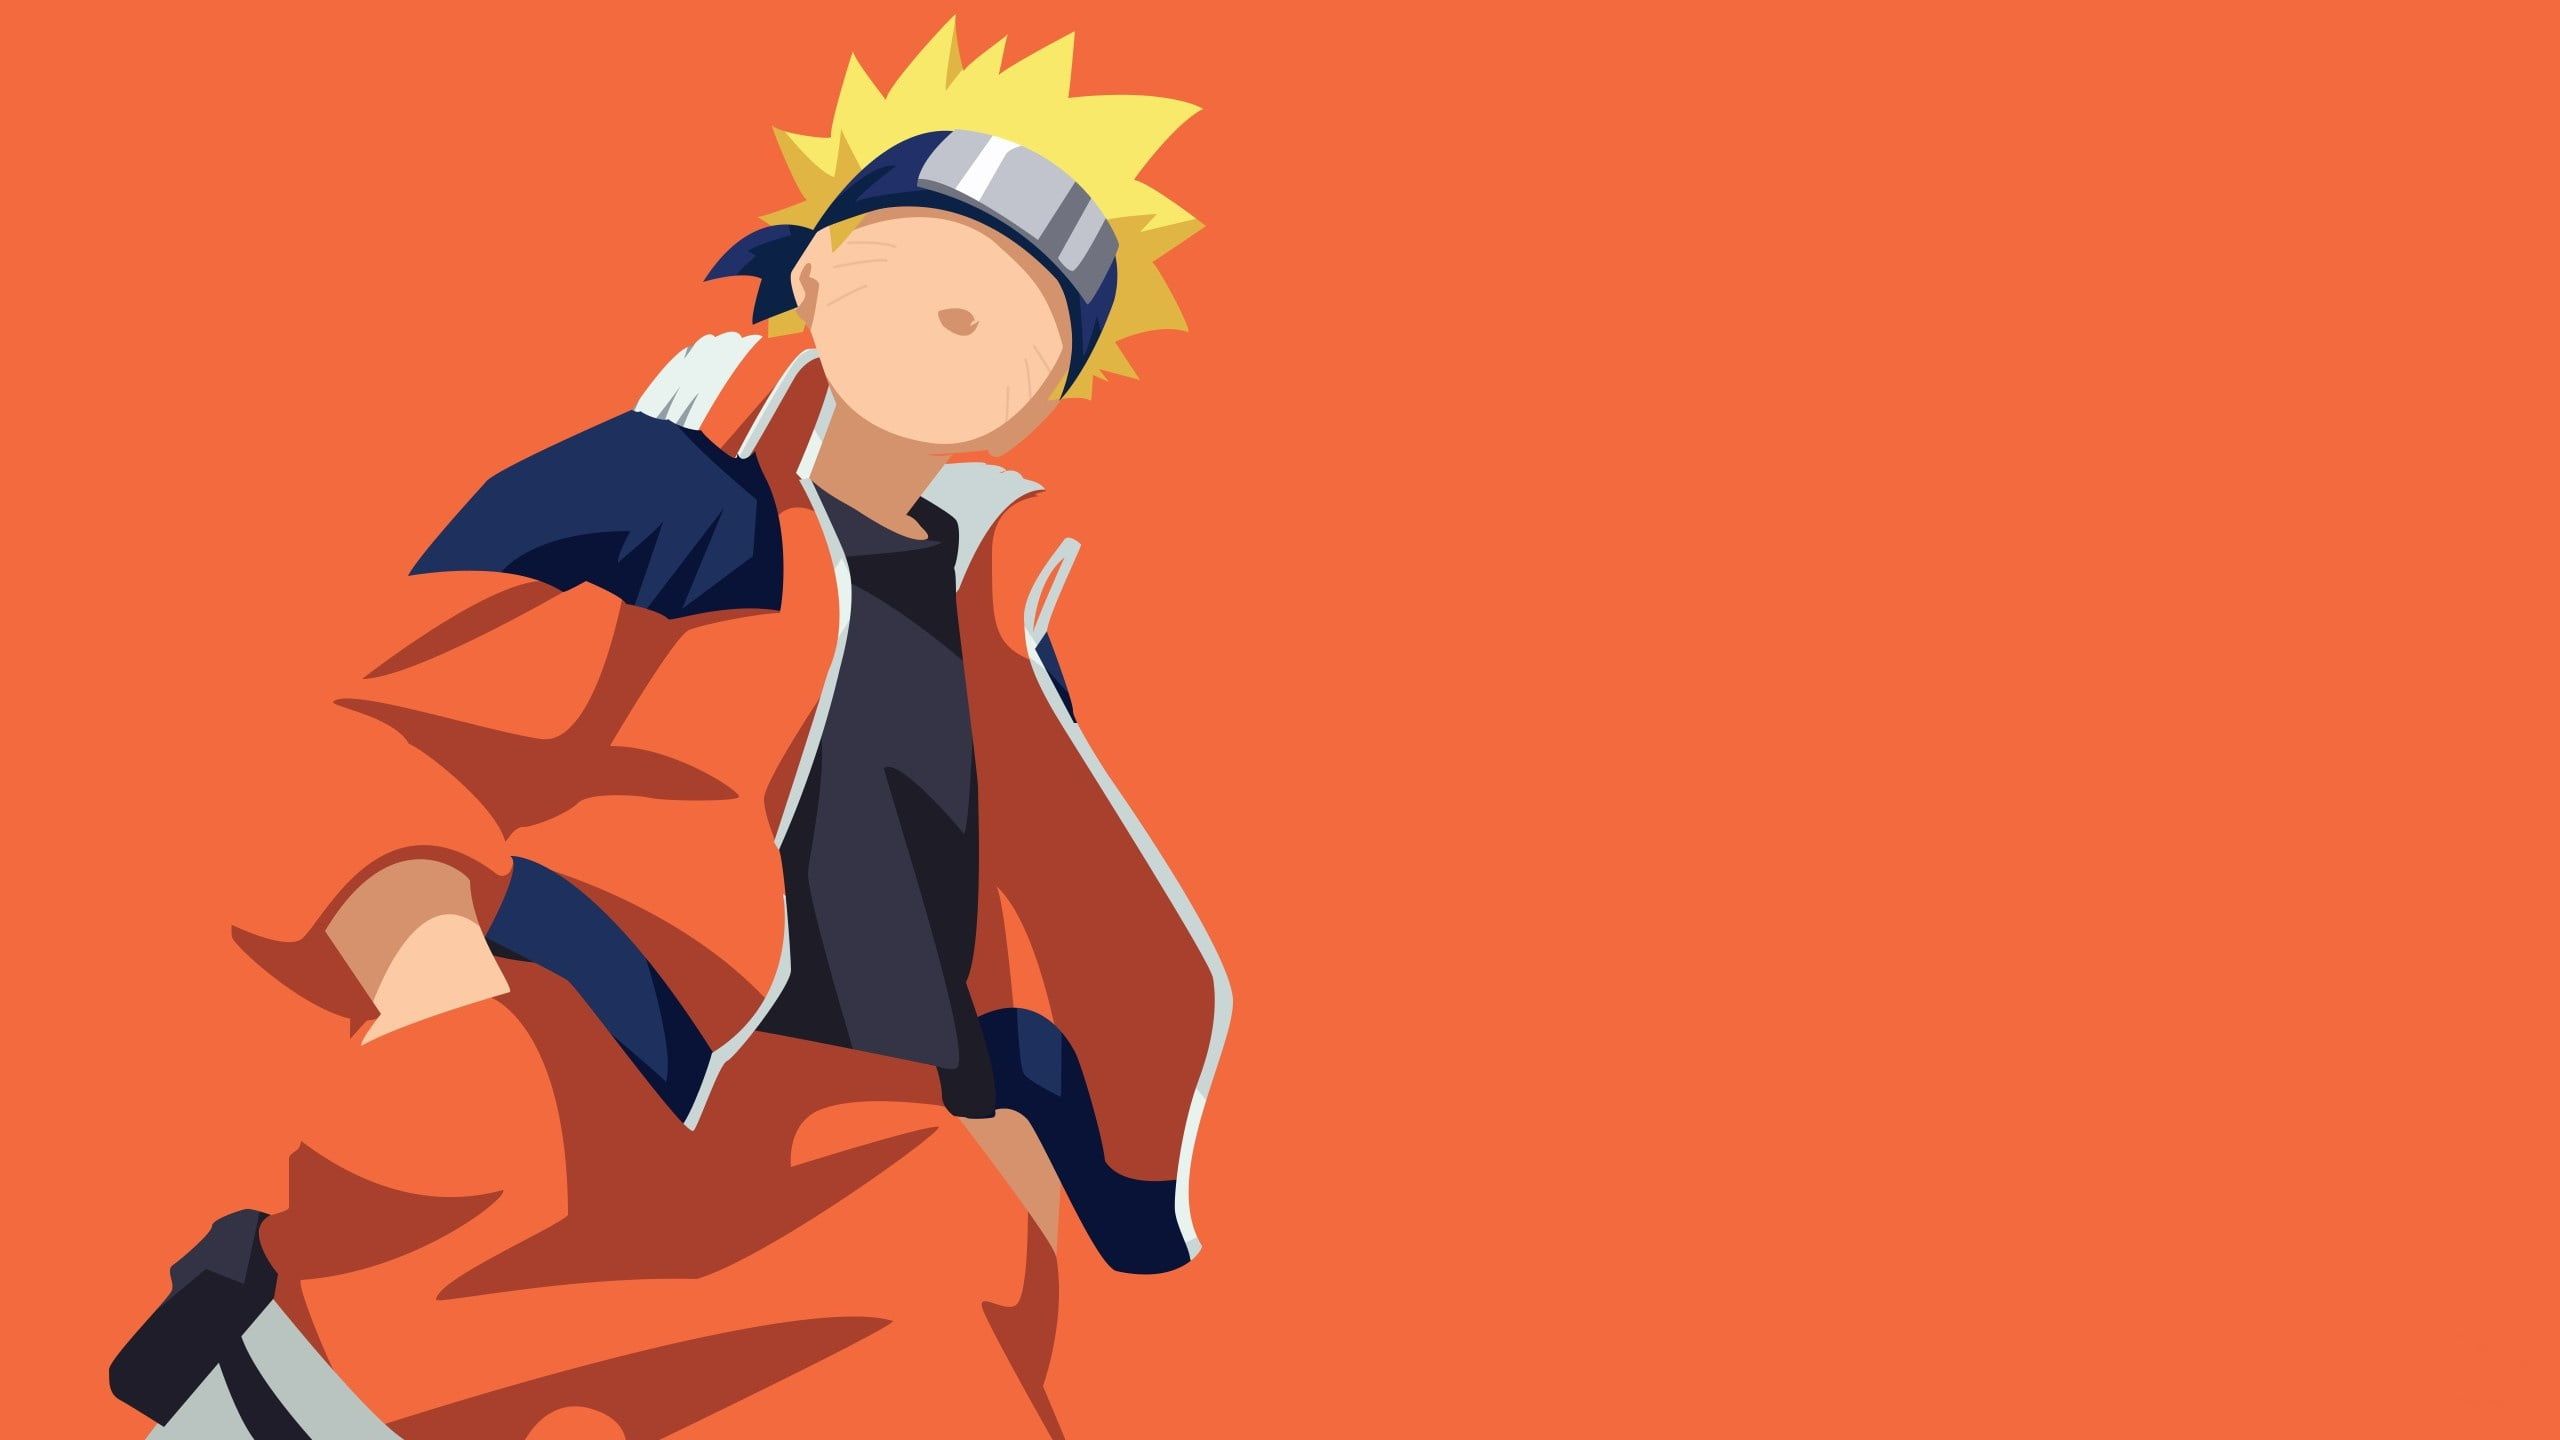 game #Naruto #minimalism #anime #orange #ninja #hero #asian #manga #hokage #shinobi #japanese Naruto Shippuden Uzumaki N. Anime, Naruto uzumaki, Naruto wallpaper